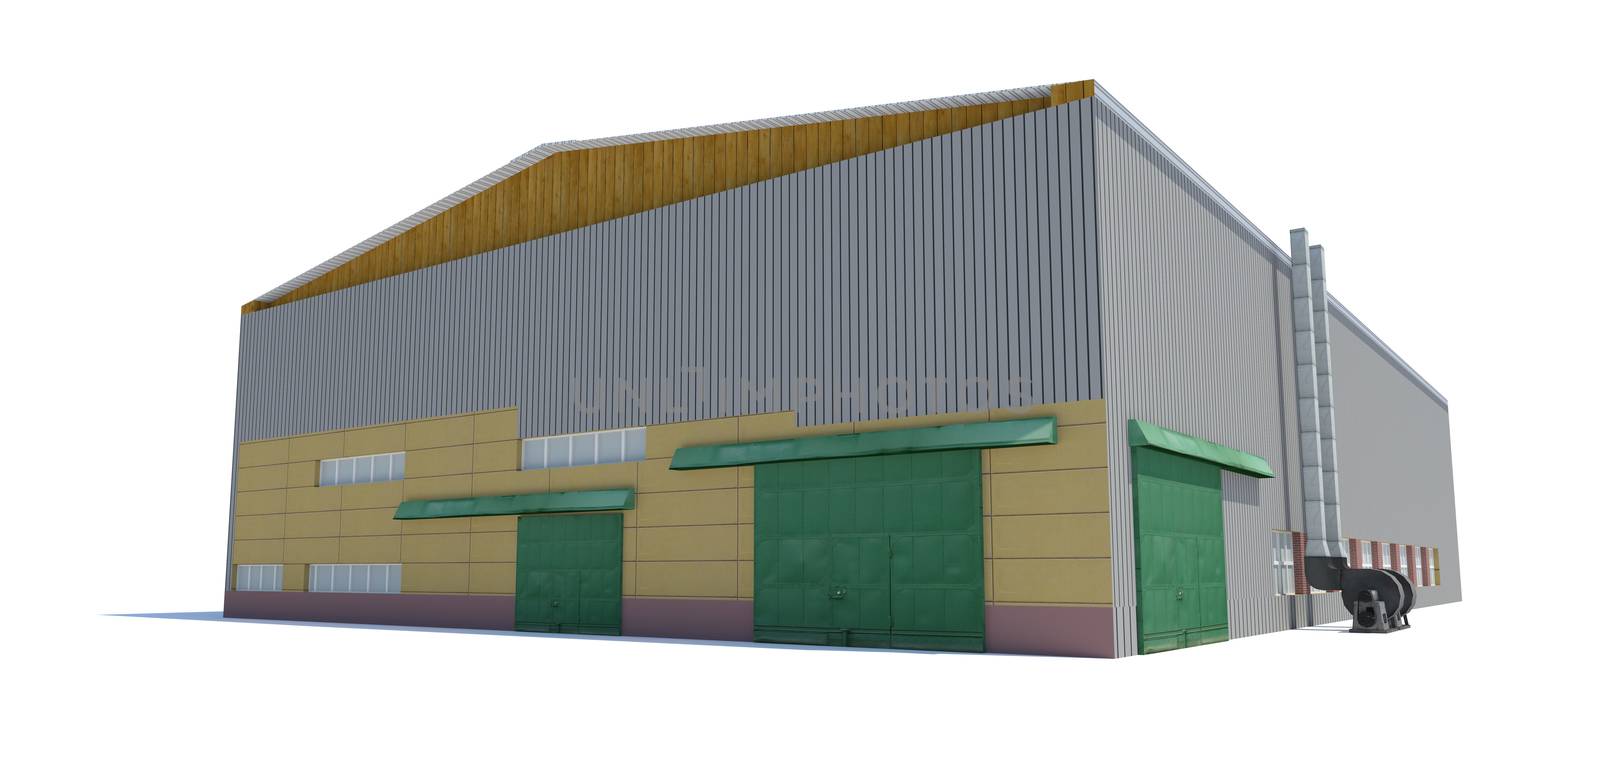 Hangar building. Isolated on white, 3D Illustration